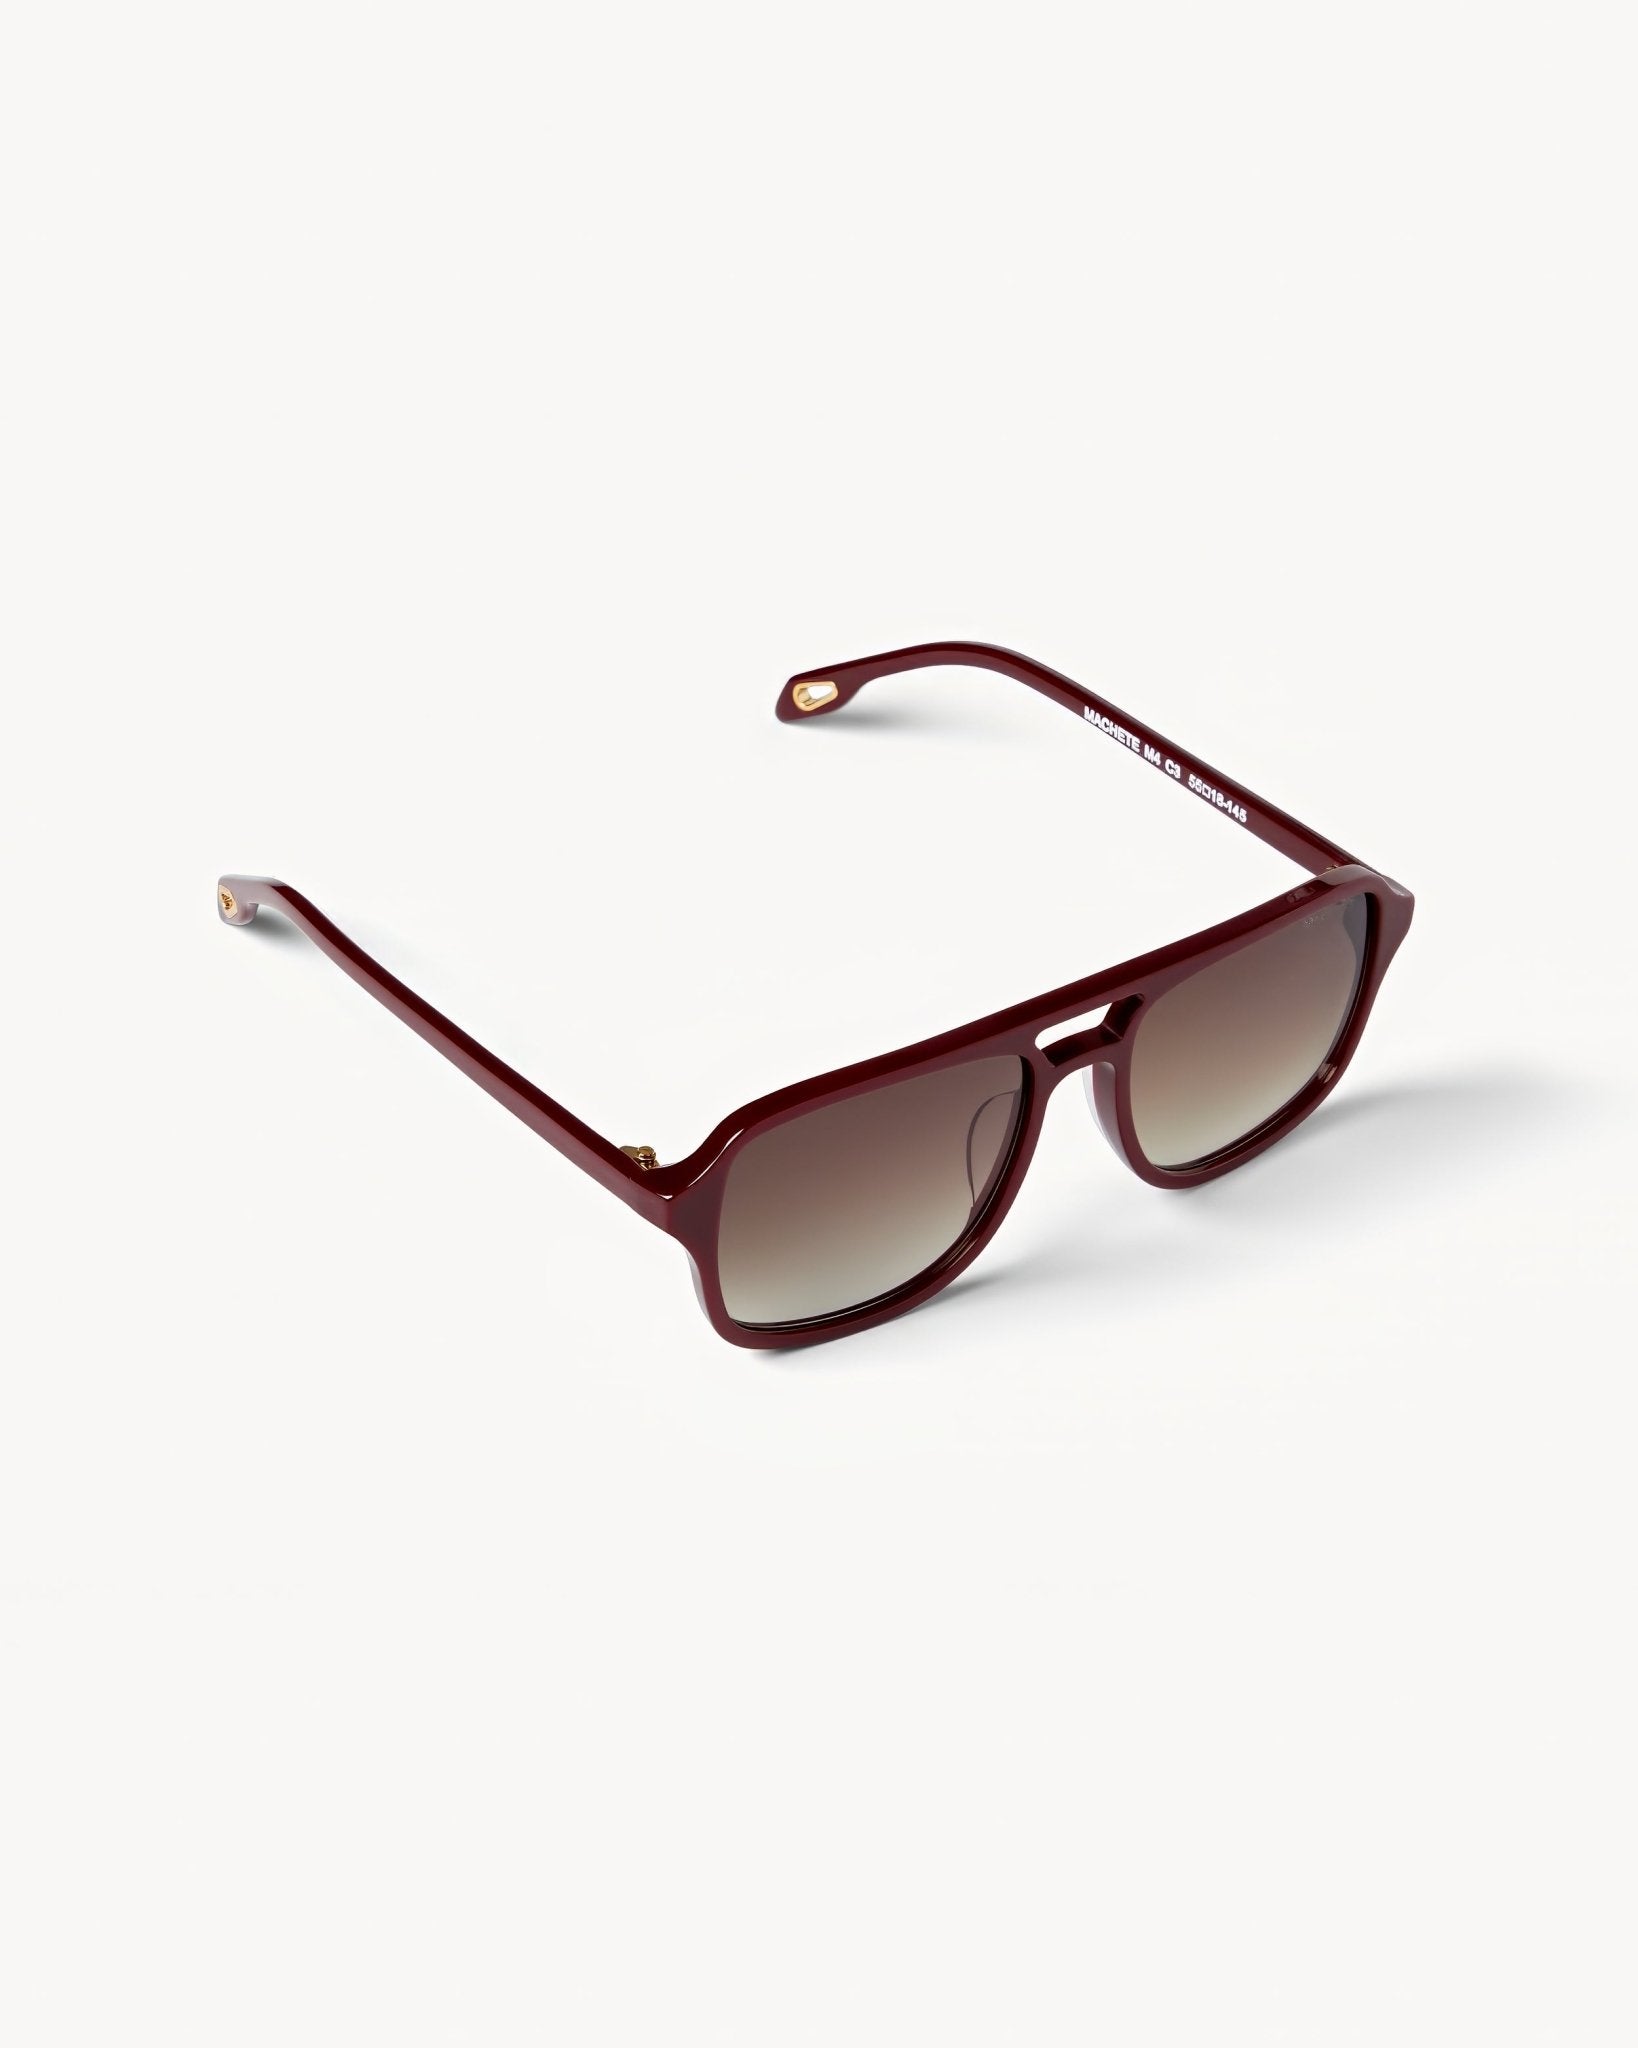 MACHETE Jane Sunglasses in Oxblood